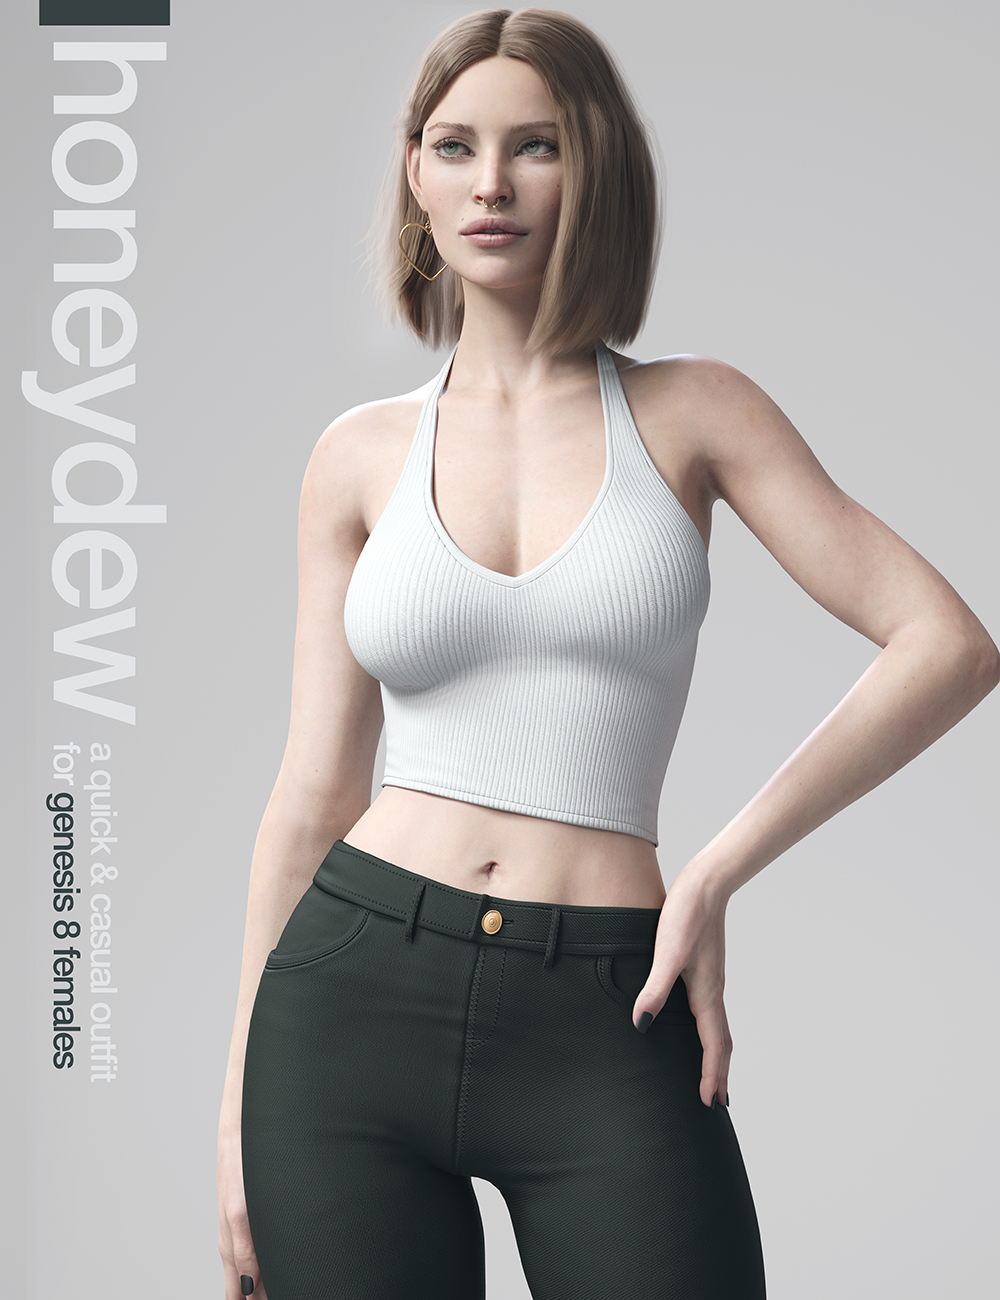 dForce Honeydew Set for Genesis 8 Female(s) by: peache, 3D Models by Daz 3D